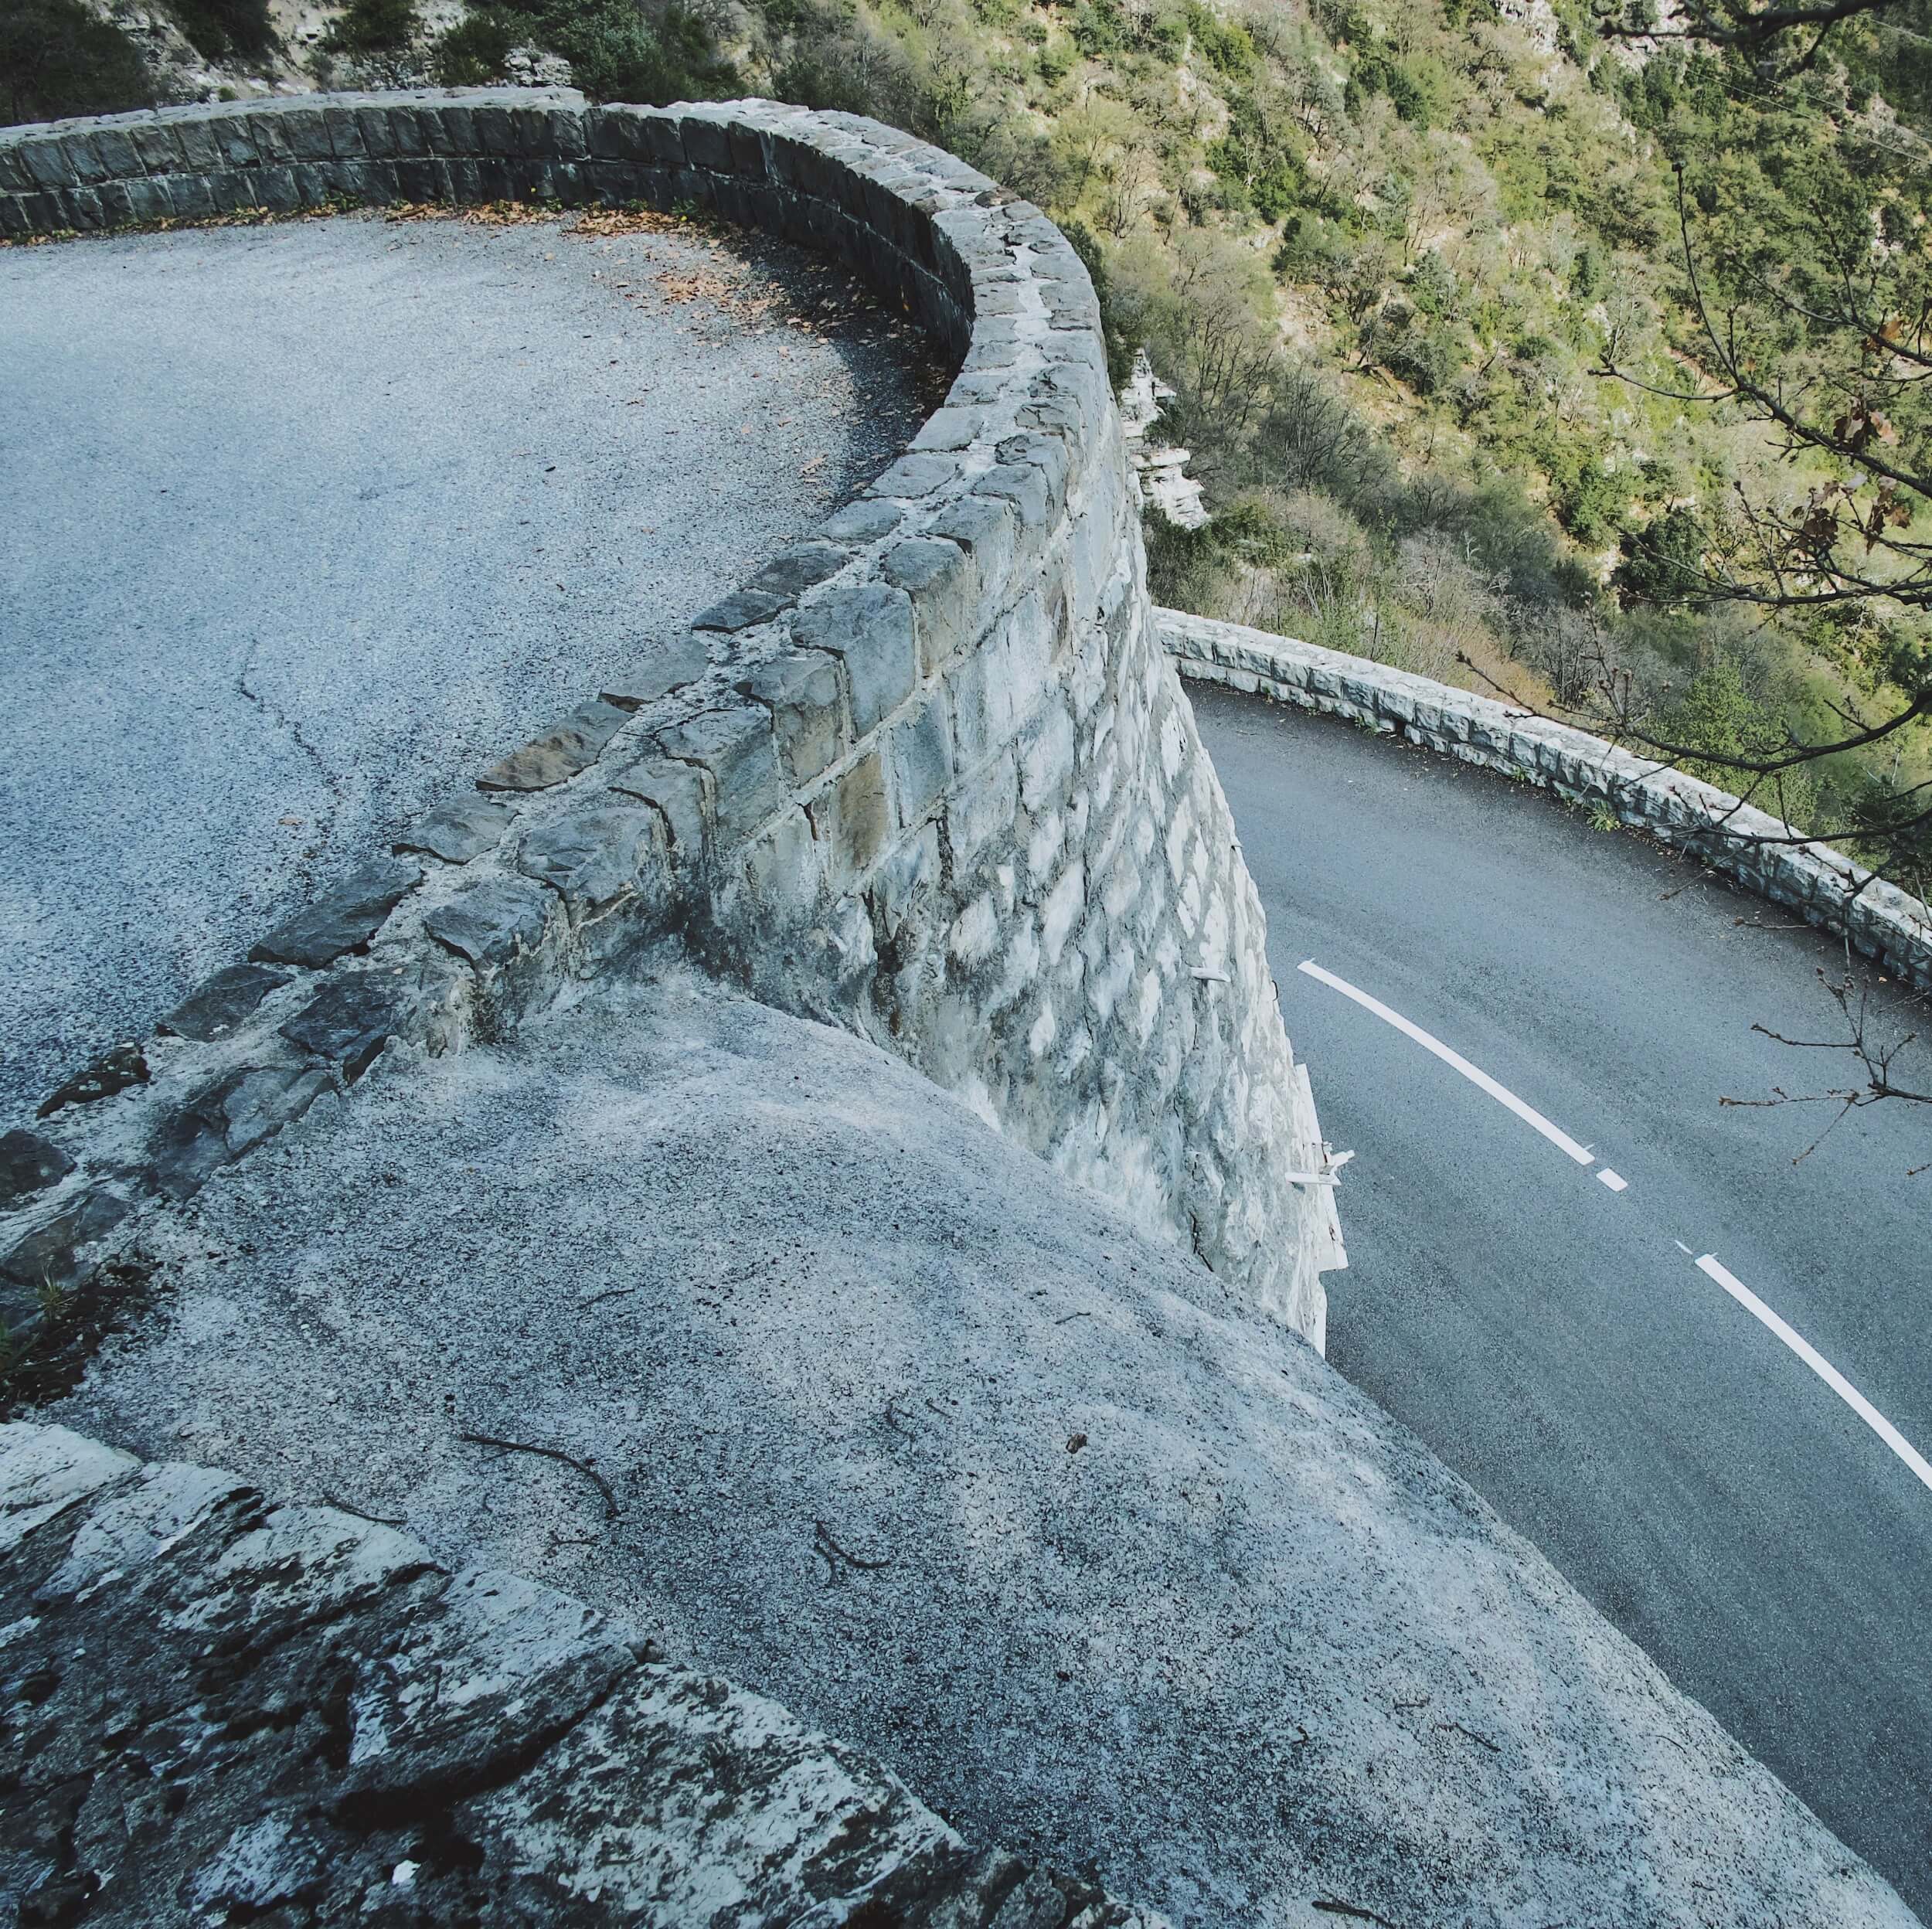 Road detail on the Col de Turini